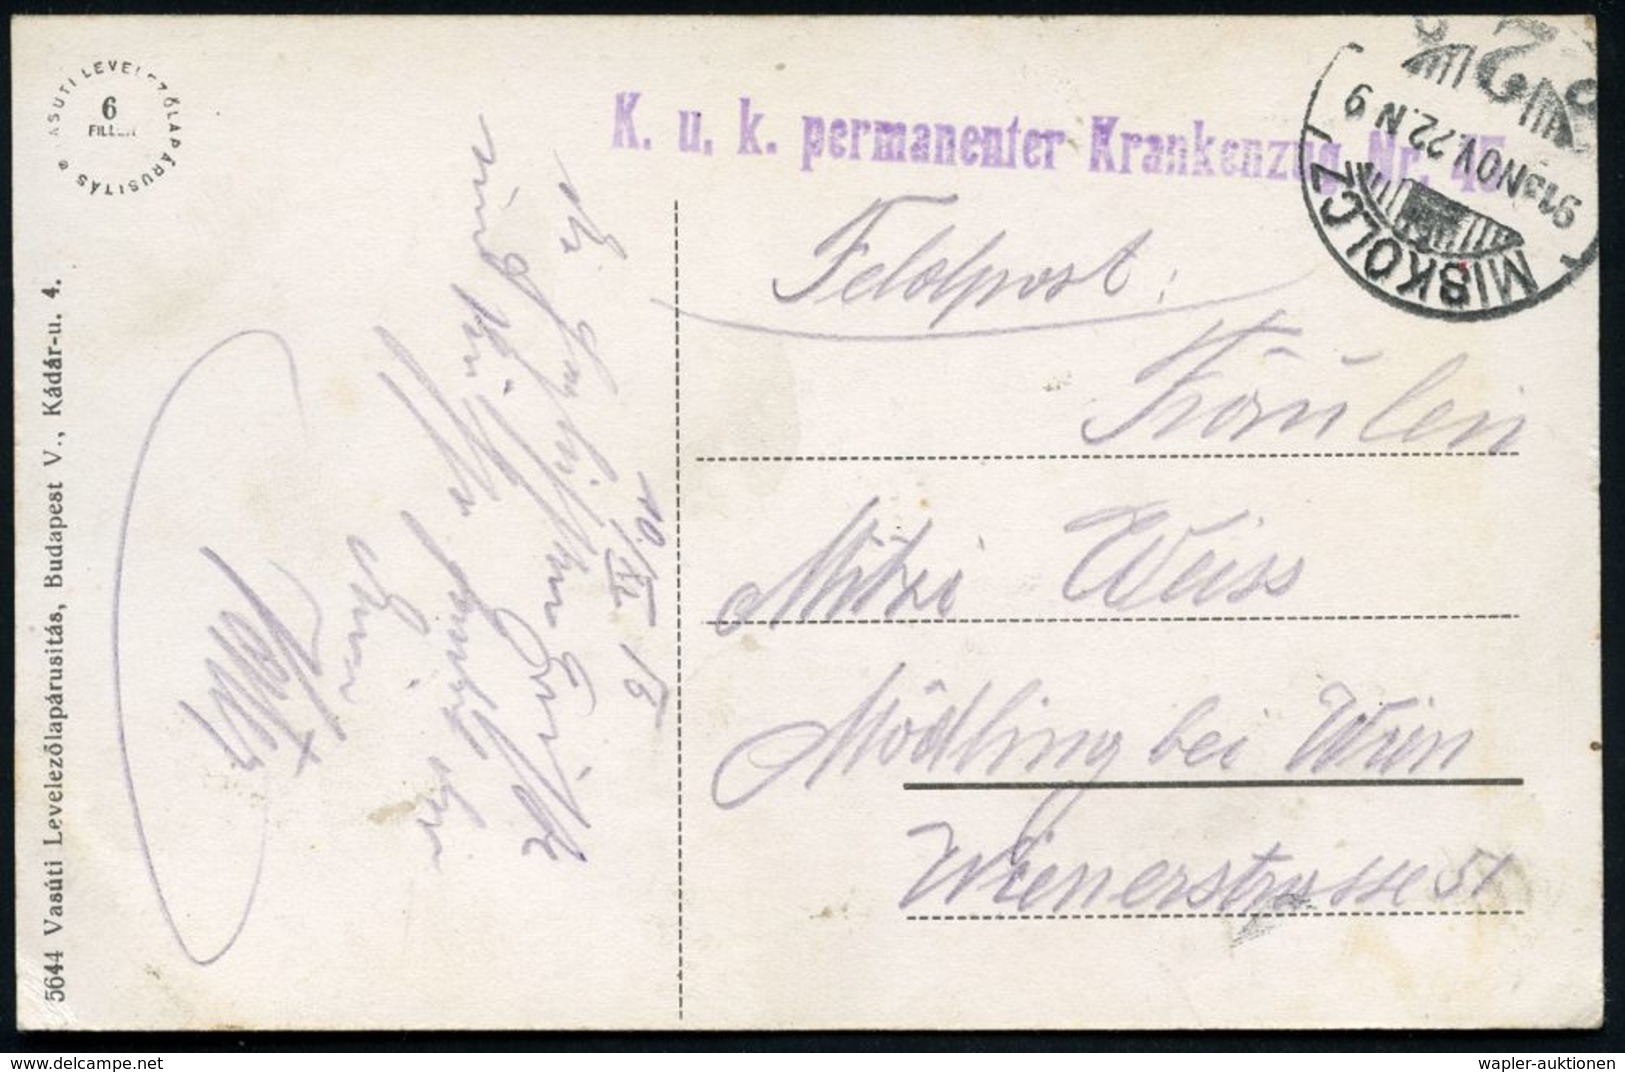 UNGARN 1915 (22.11.) 1K-Gitter: MISKOLCZ/2 + Viol. 1L: K. U. K. Permanenter Krankenzug Nr. 45 , Monochrome Feldpost-Ak.: - Medizin